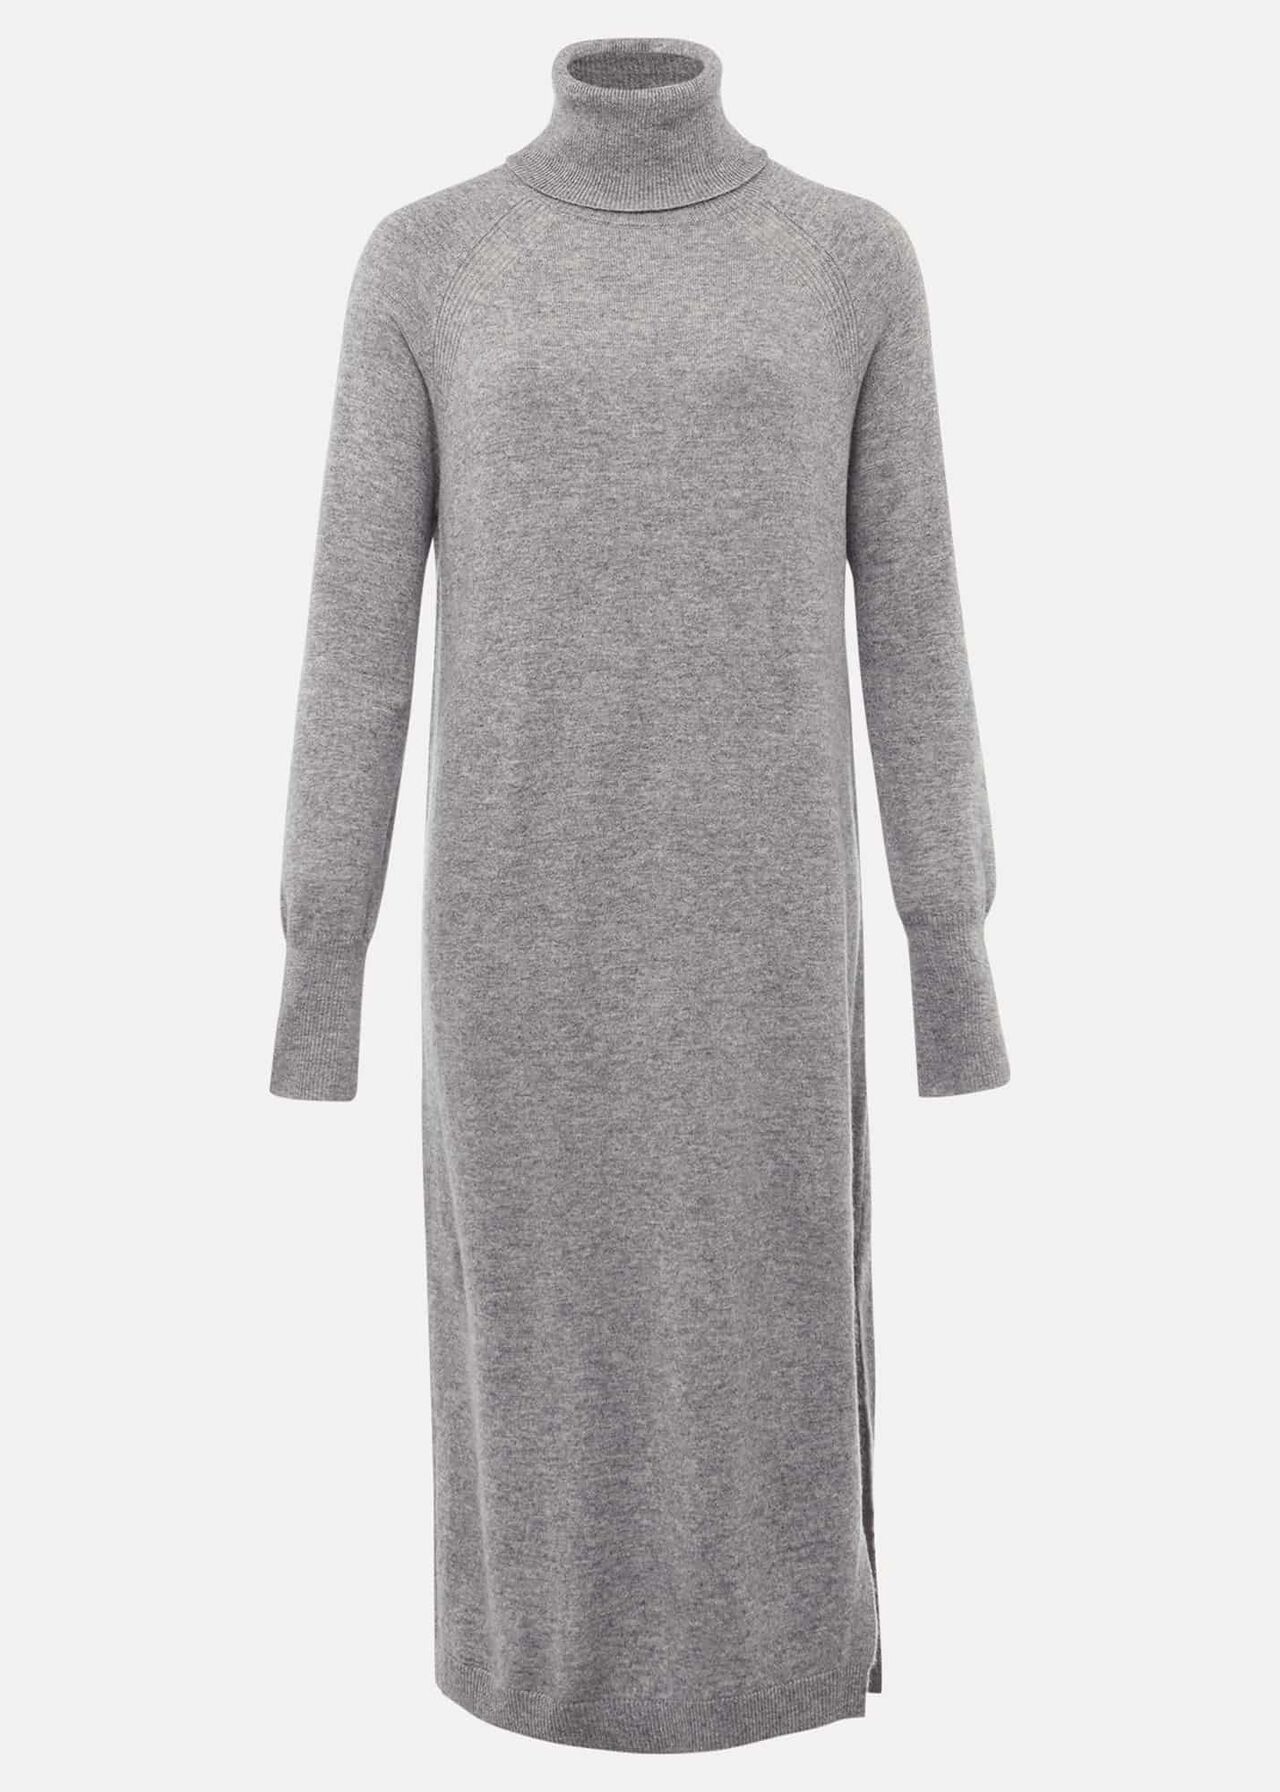 Seline Wool Cashmere Dress